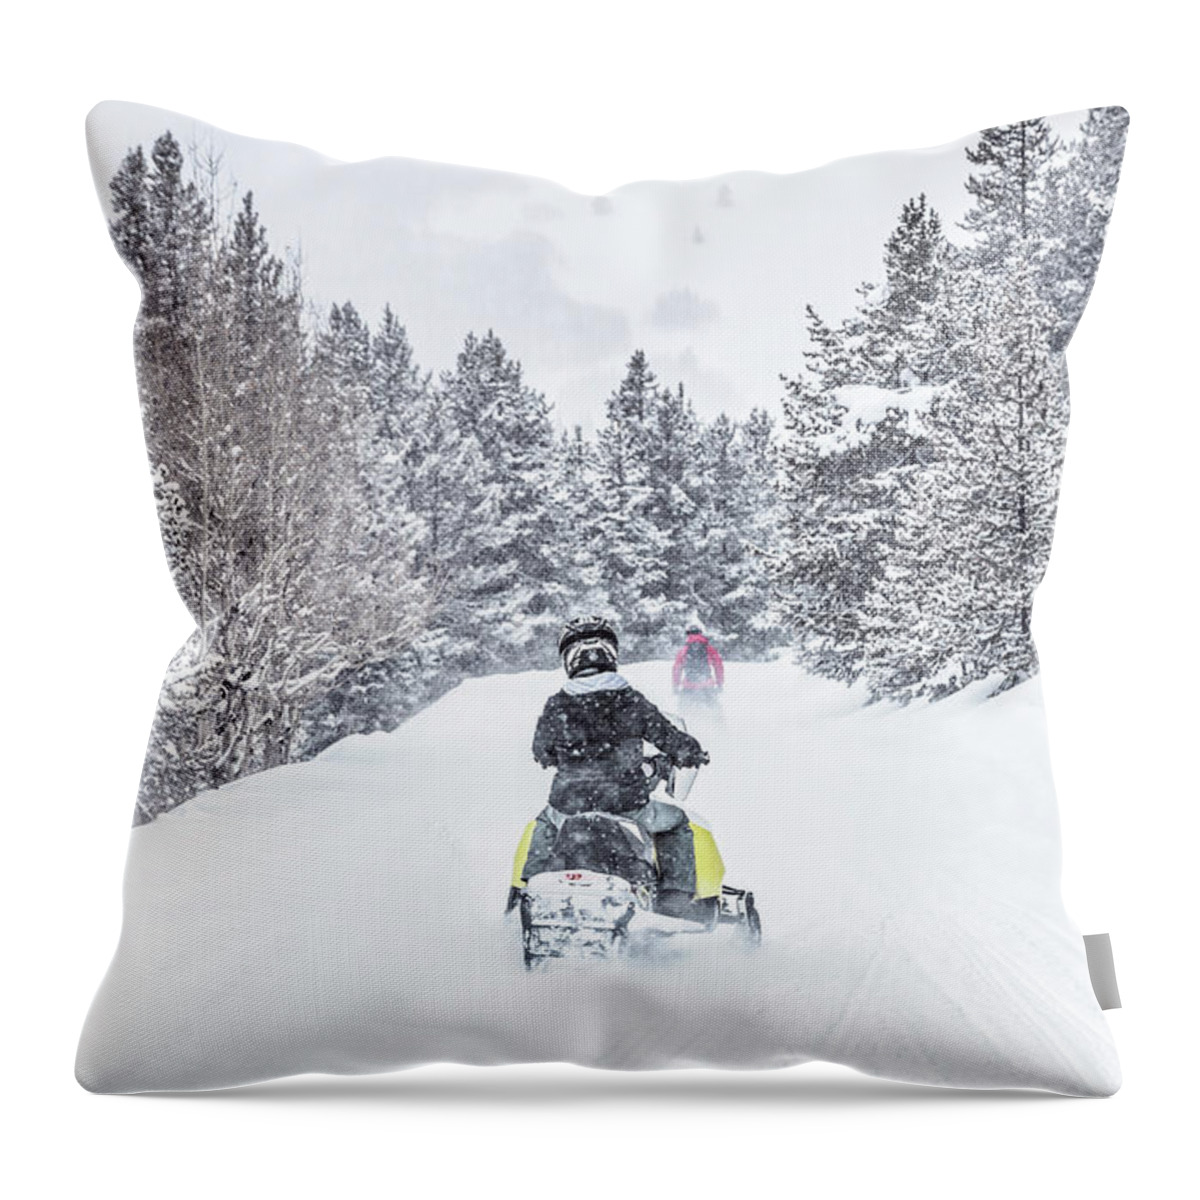 Kremsdorf Throw Pillow featuring the photograph Winter's Way by Evelina Kremsdorf